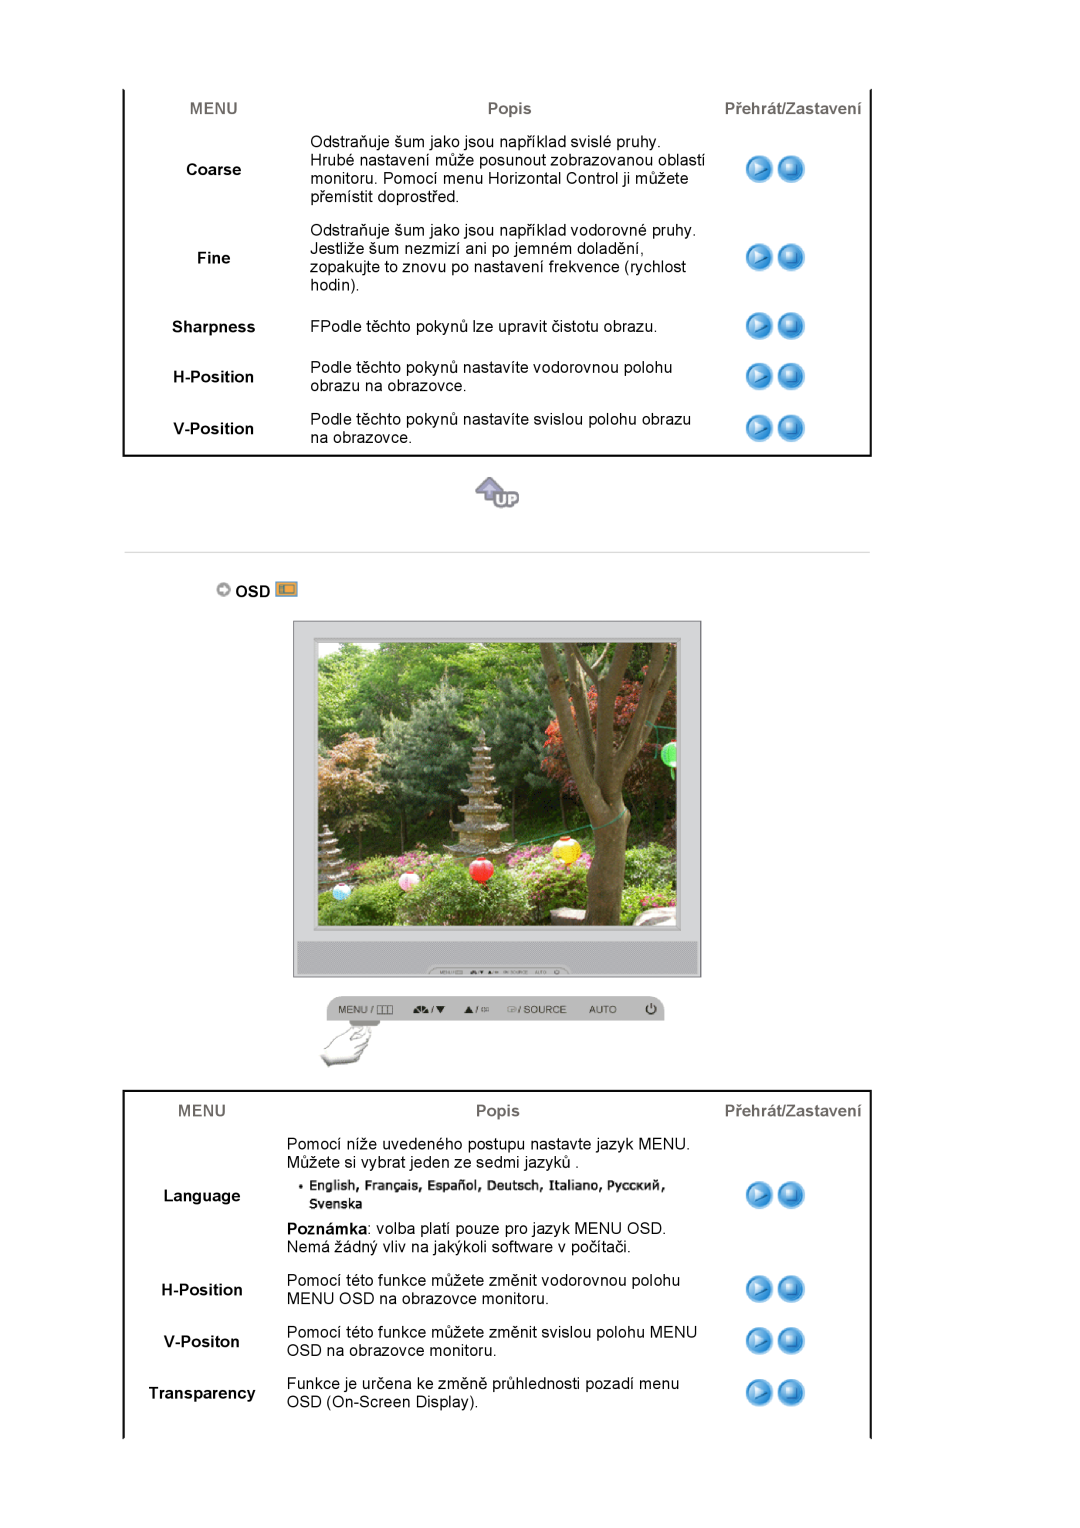 Samsung LS17MJSKSZ/EDC manual Coarse Fine Sharpness H-Position V-Position, Language H-Position V-Positon Transparency 